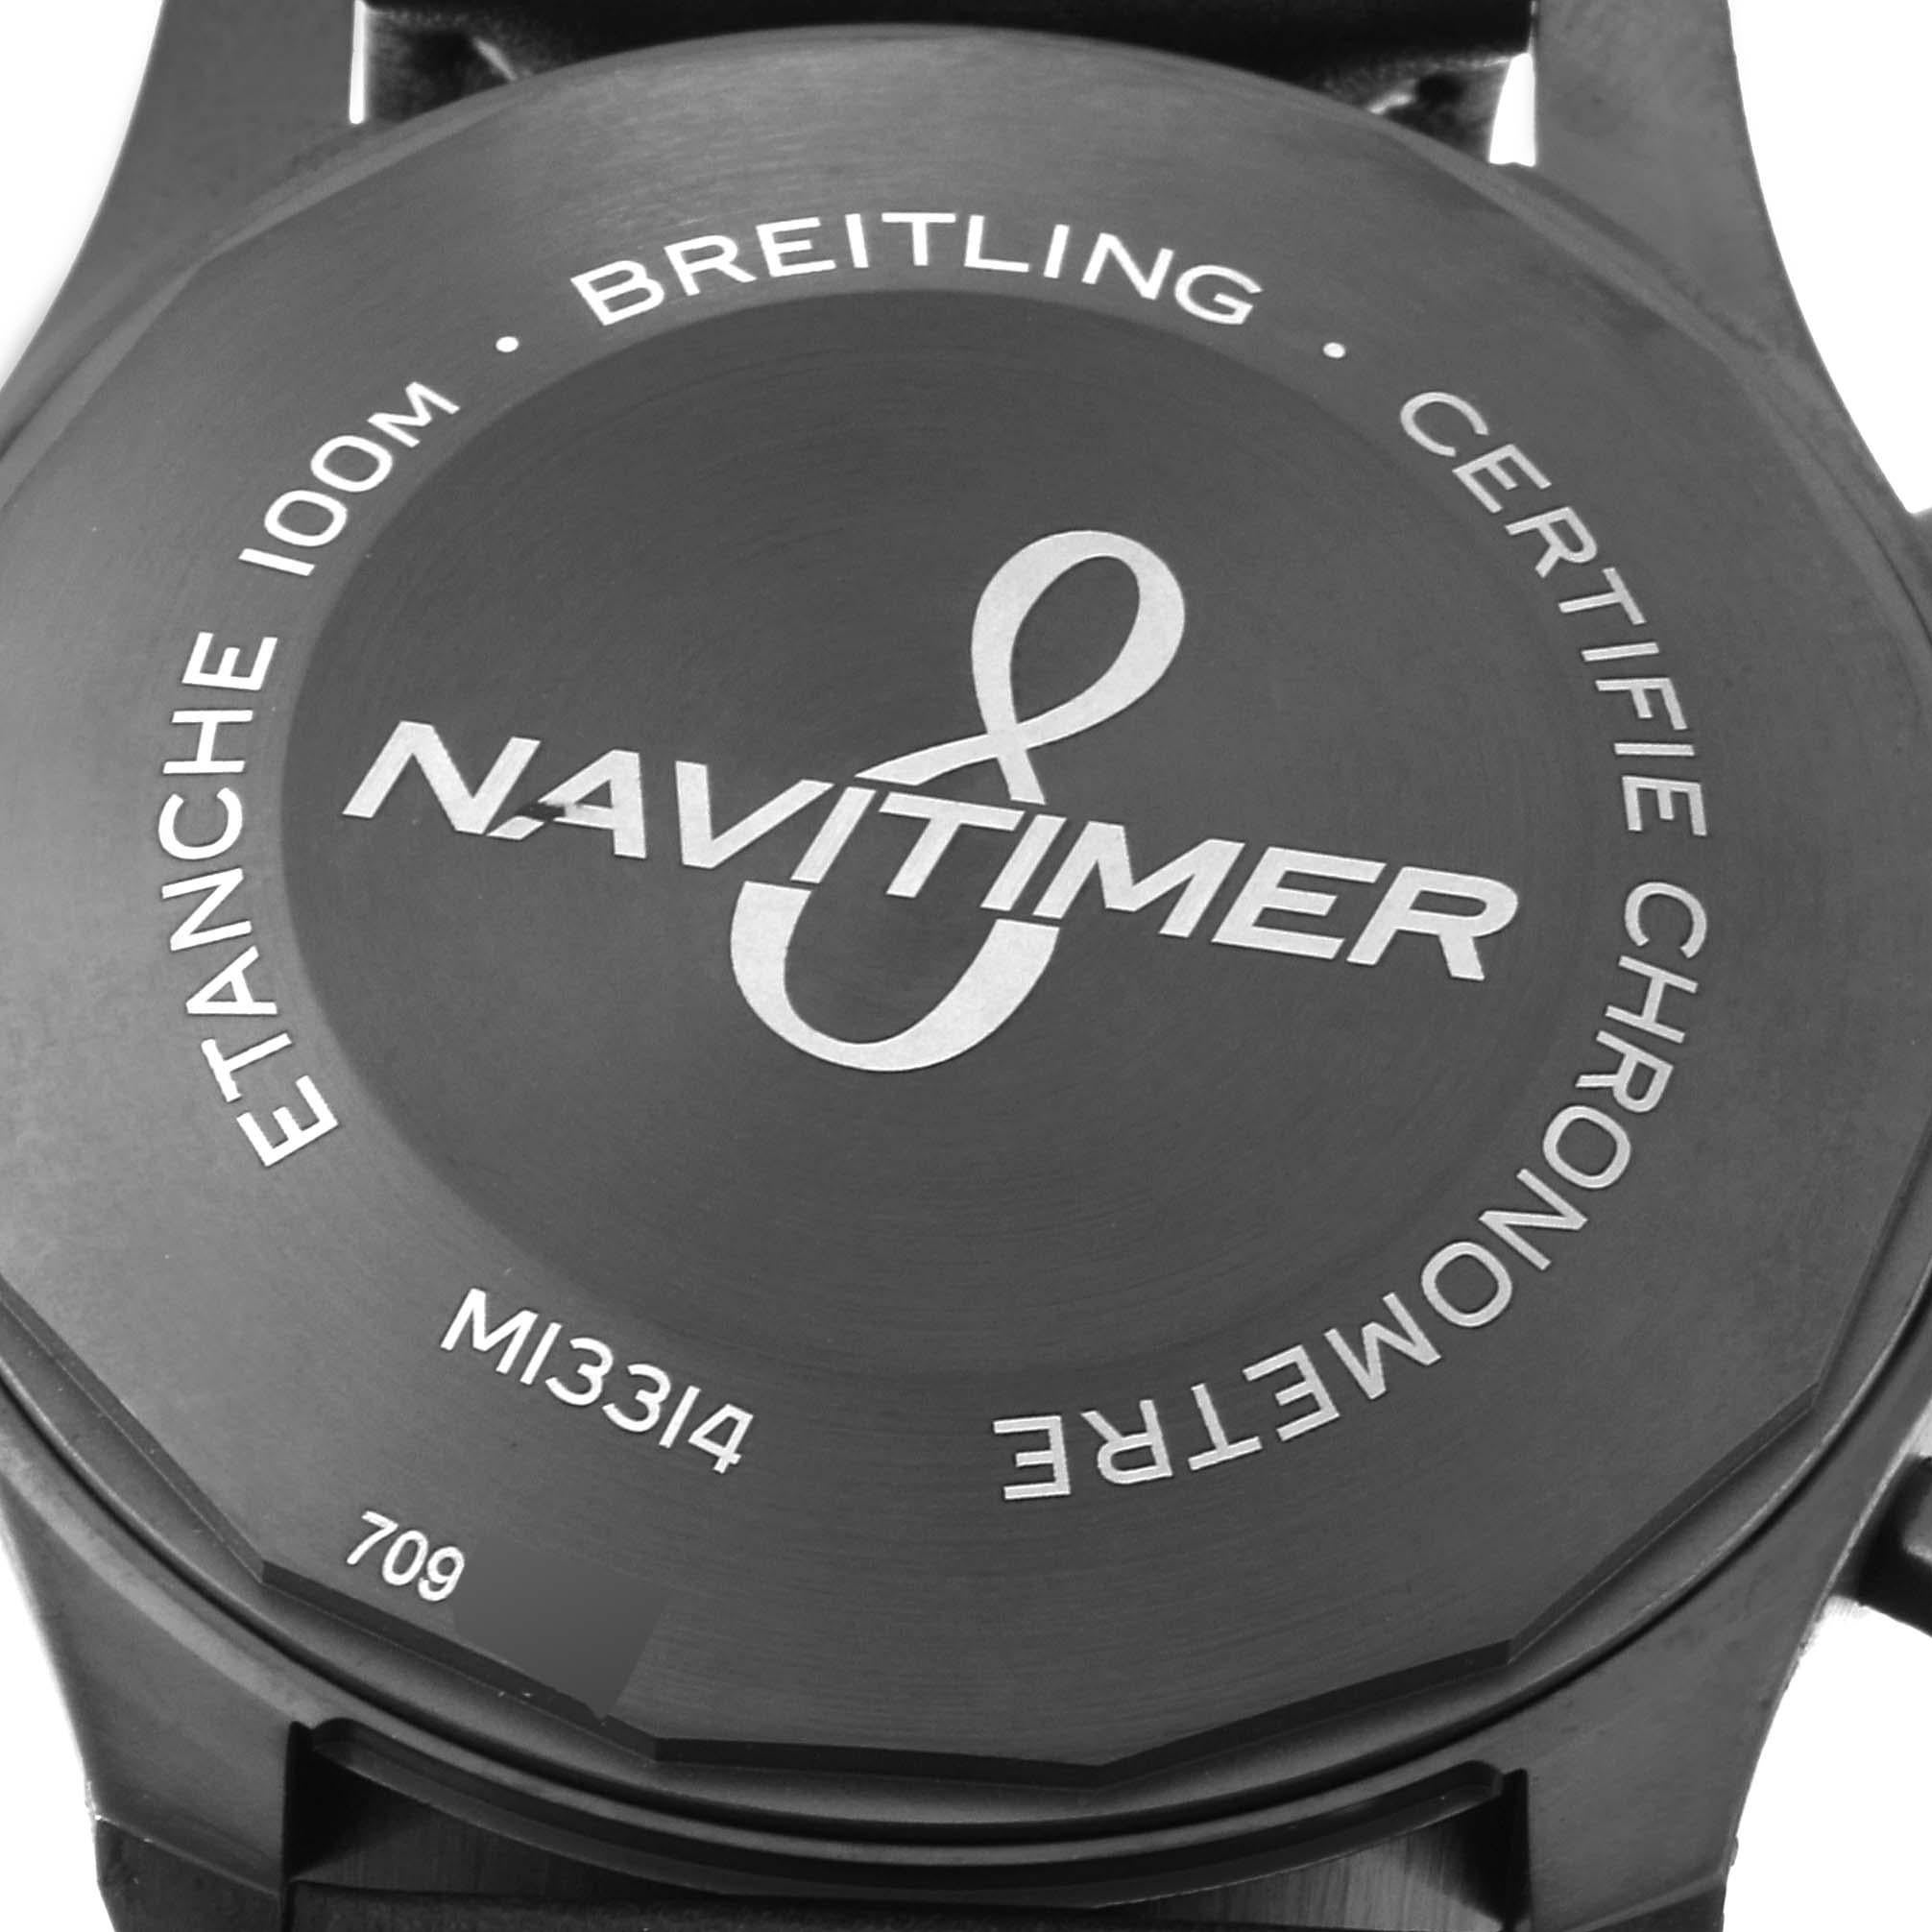 Breitling Navitimer 8 Chronograph 43 DLC Steel Mens Watch M13314 Unworn For Sale 1